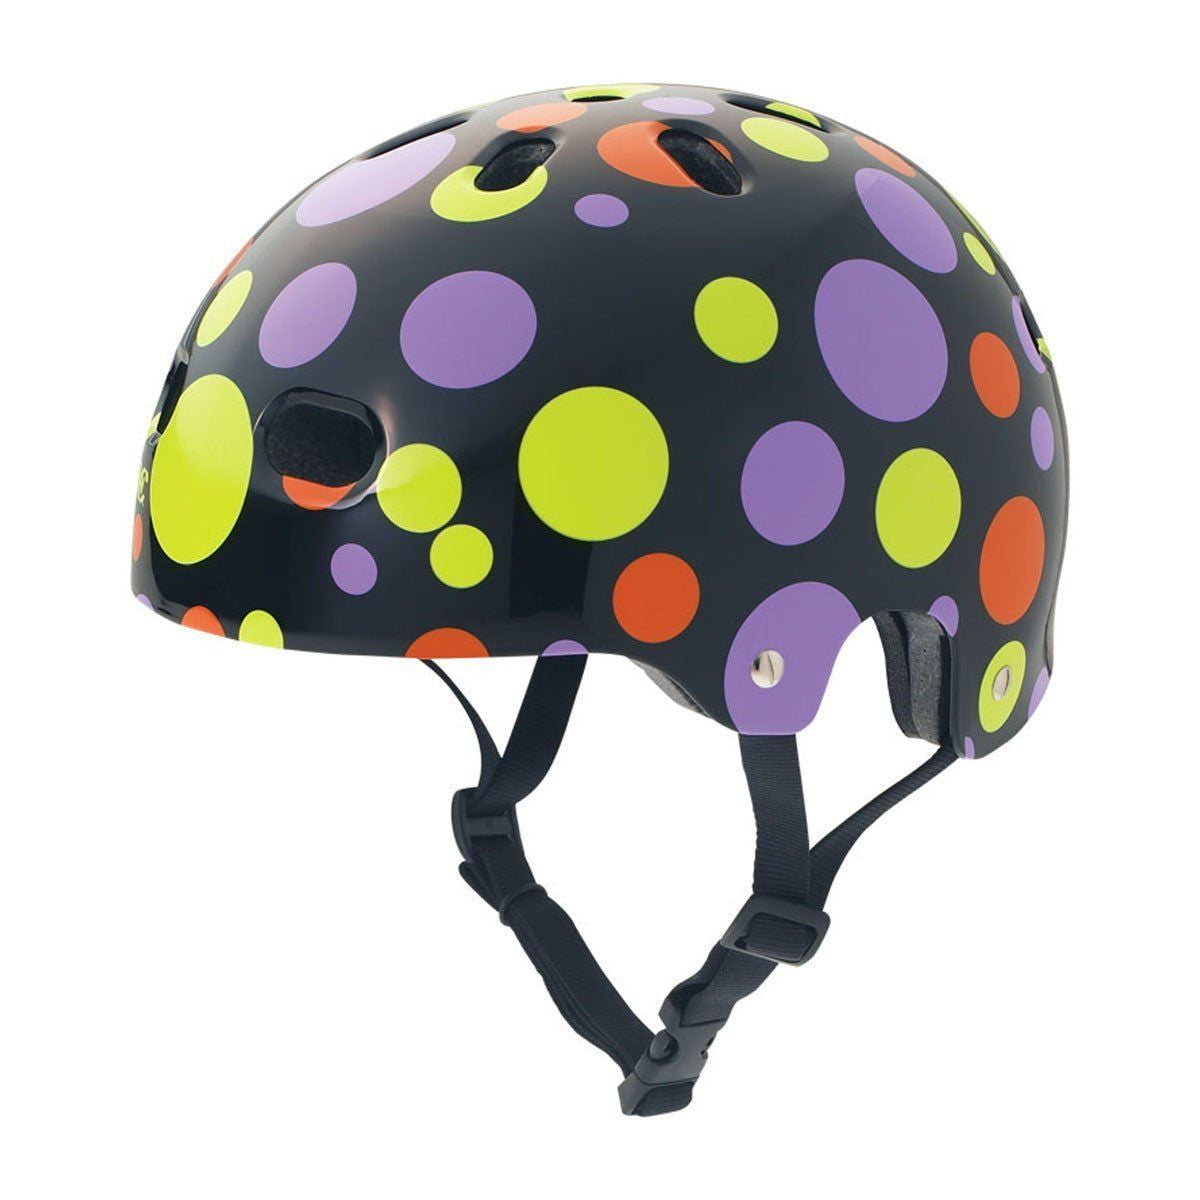 Pryme 8 V2 BMX / Skate Helmet - Sz XS-SM - Black & Dots